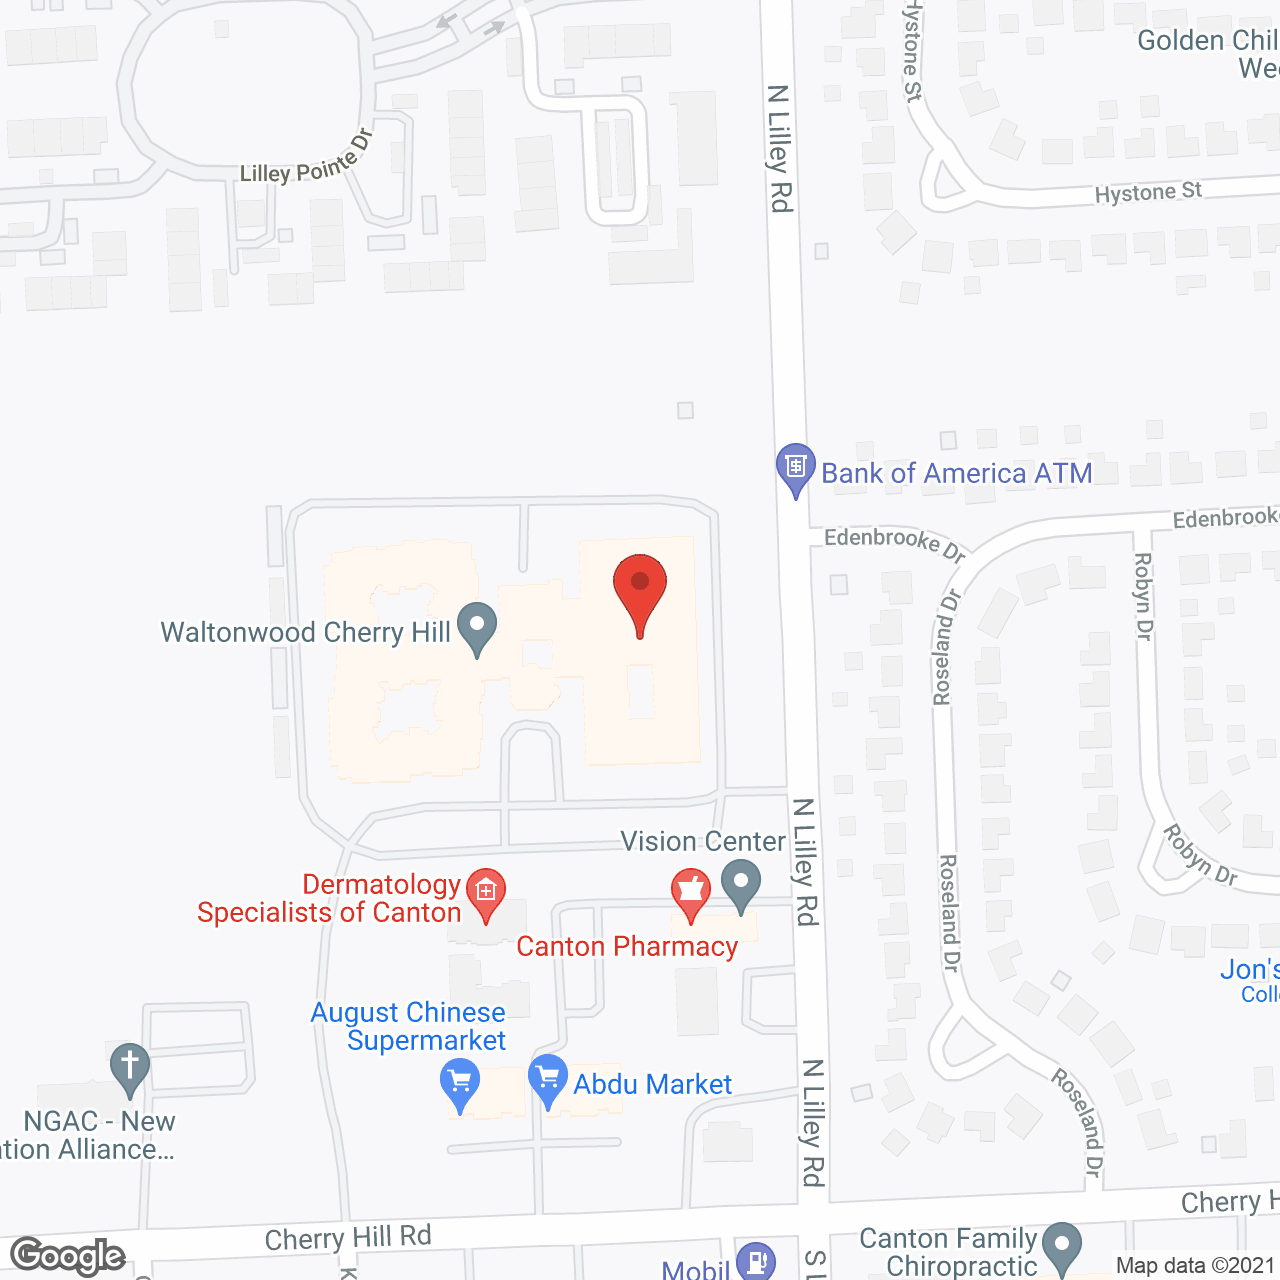 Waltonwood Cherry Hill in google map